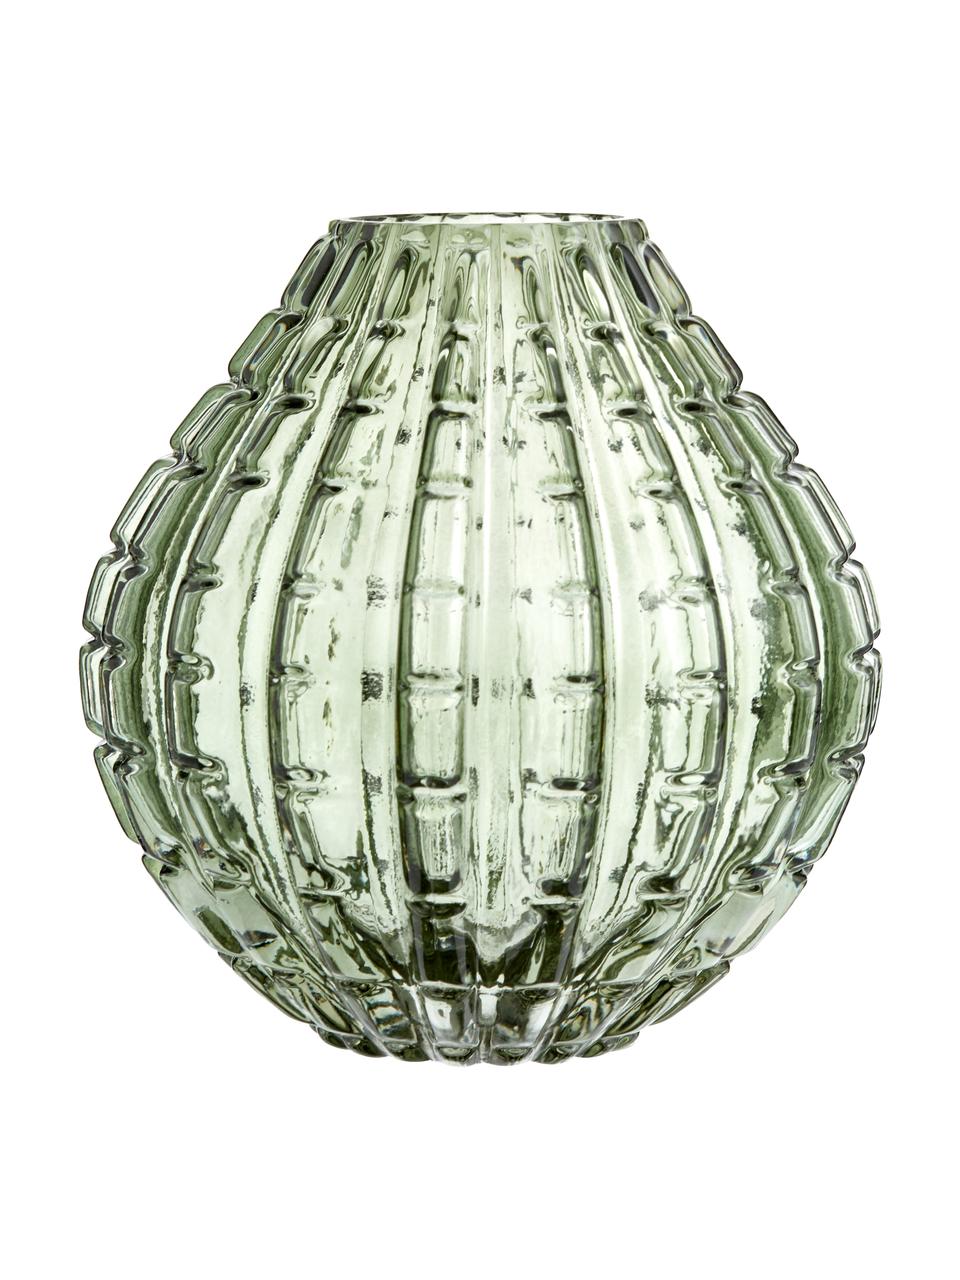 Glas-Vase Lioba in Grün, Glas, Grün, Ø 15 x H 17 cm